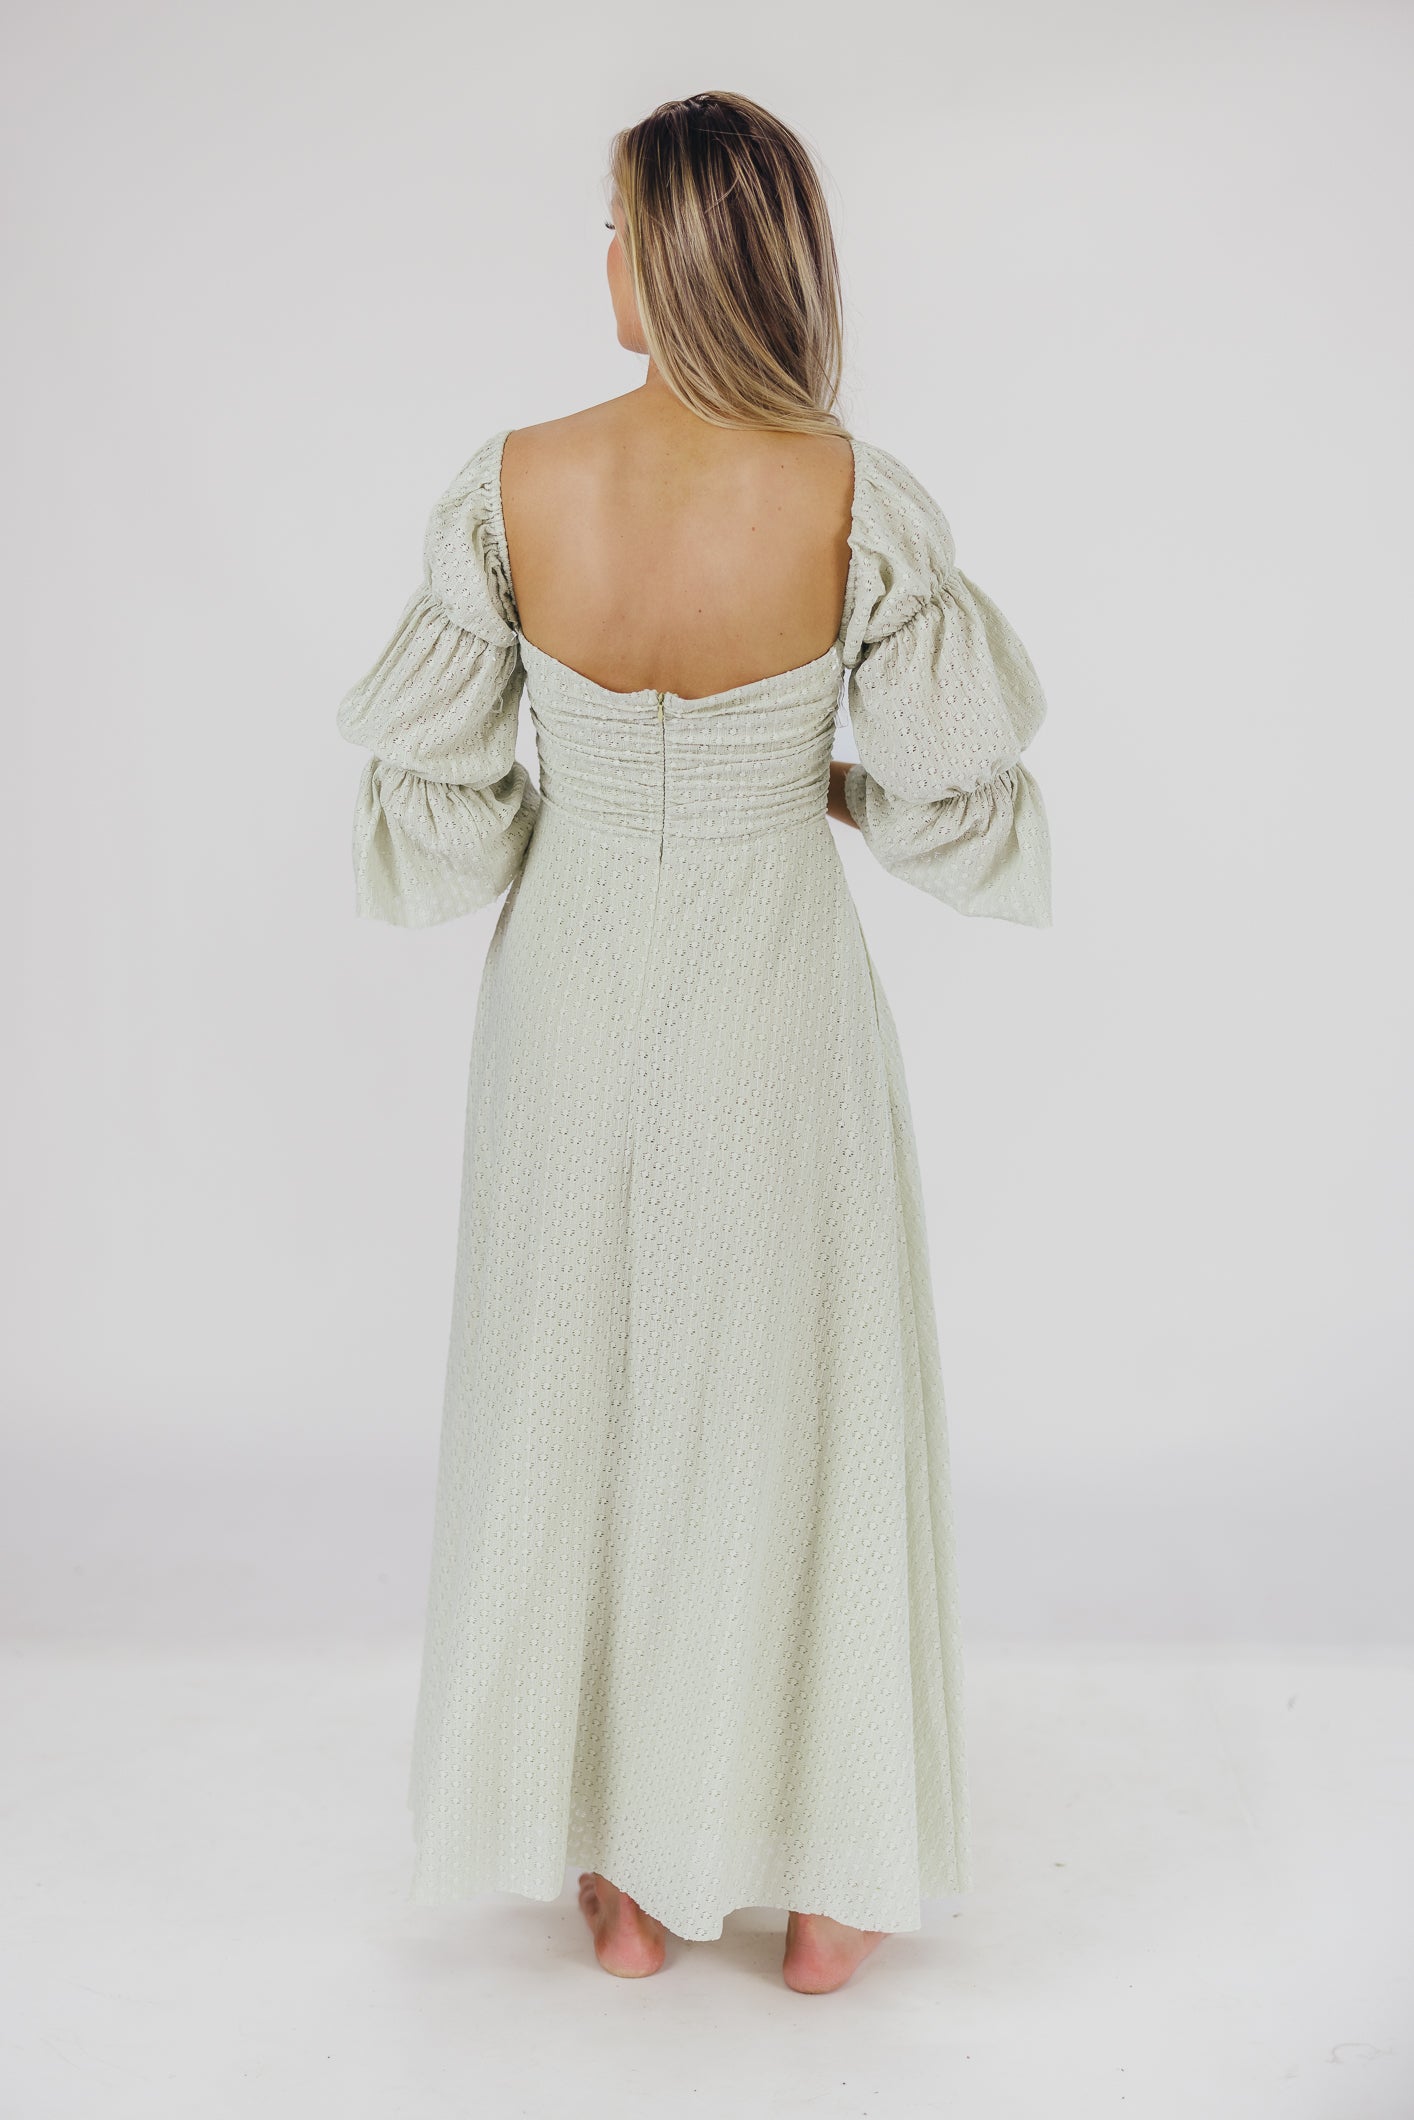 Corrine Off Shoulder Maxi Dress in Mint - Bump Friendly - Pre-Order 4/30